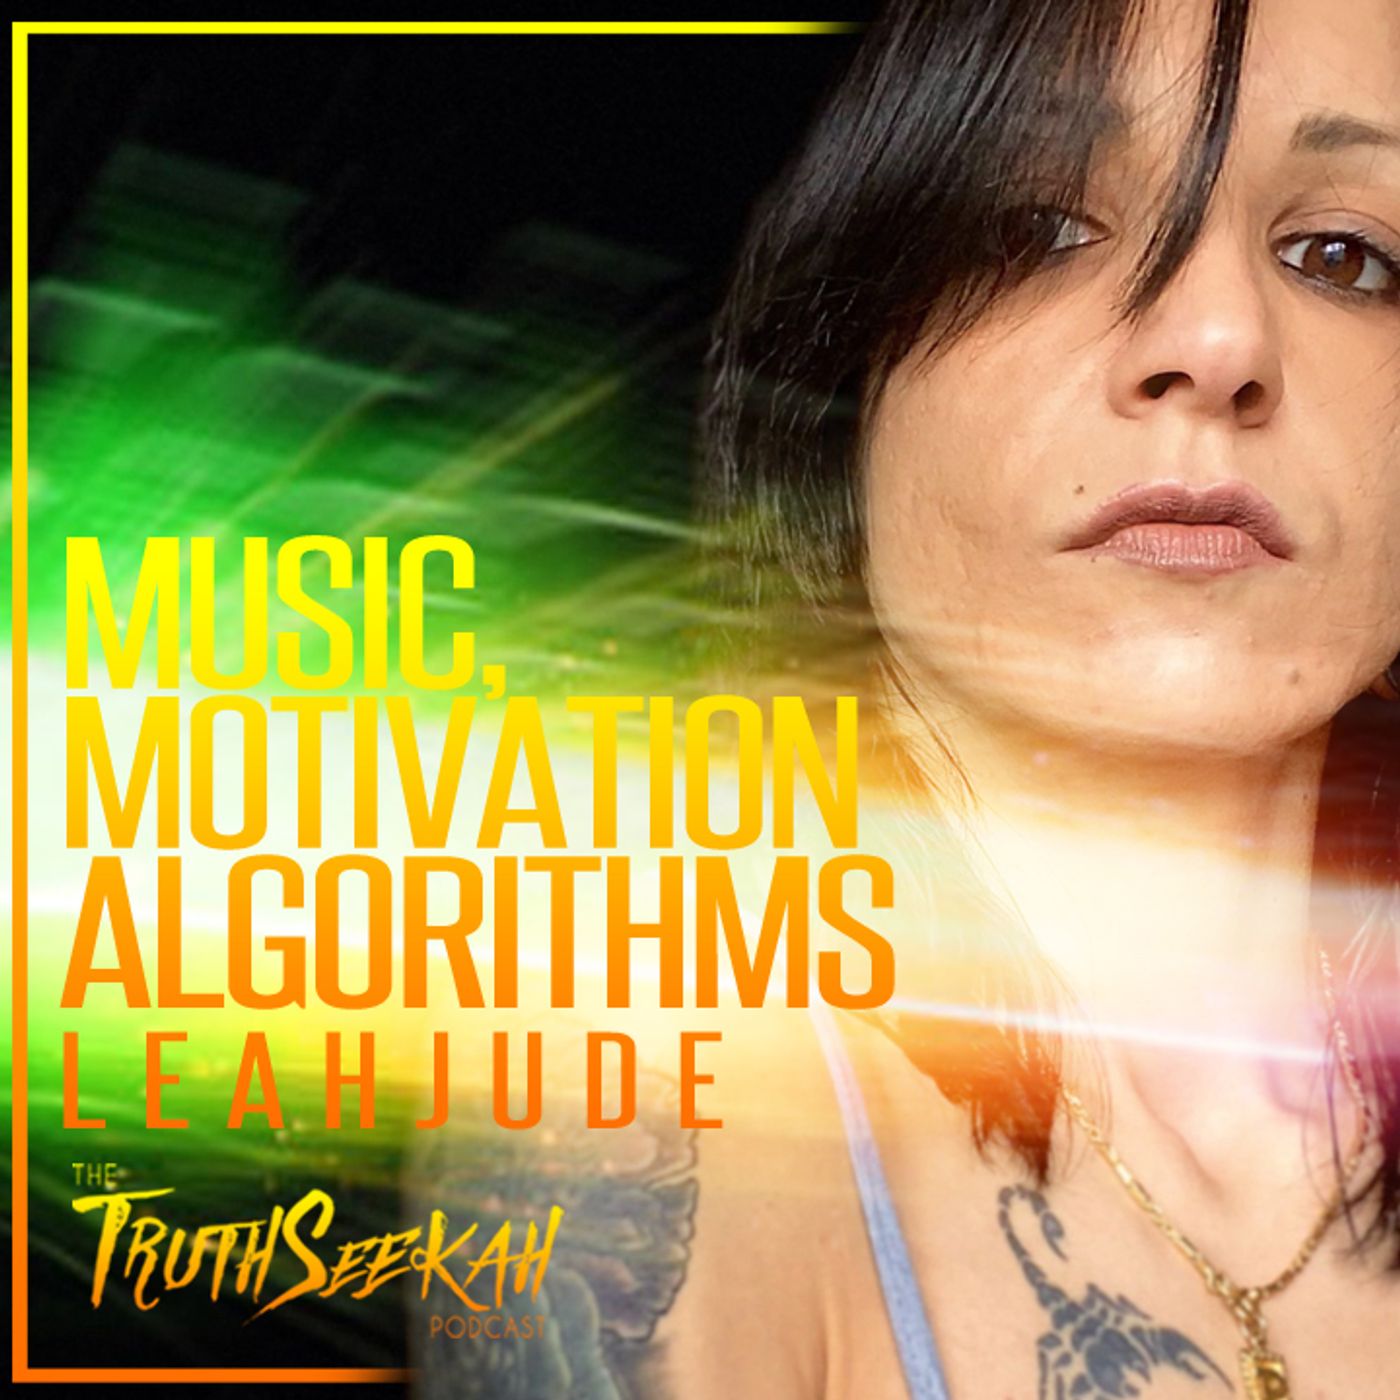 Music, Motivation and Algorithms | LeahJude